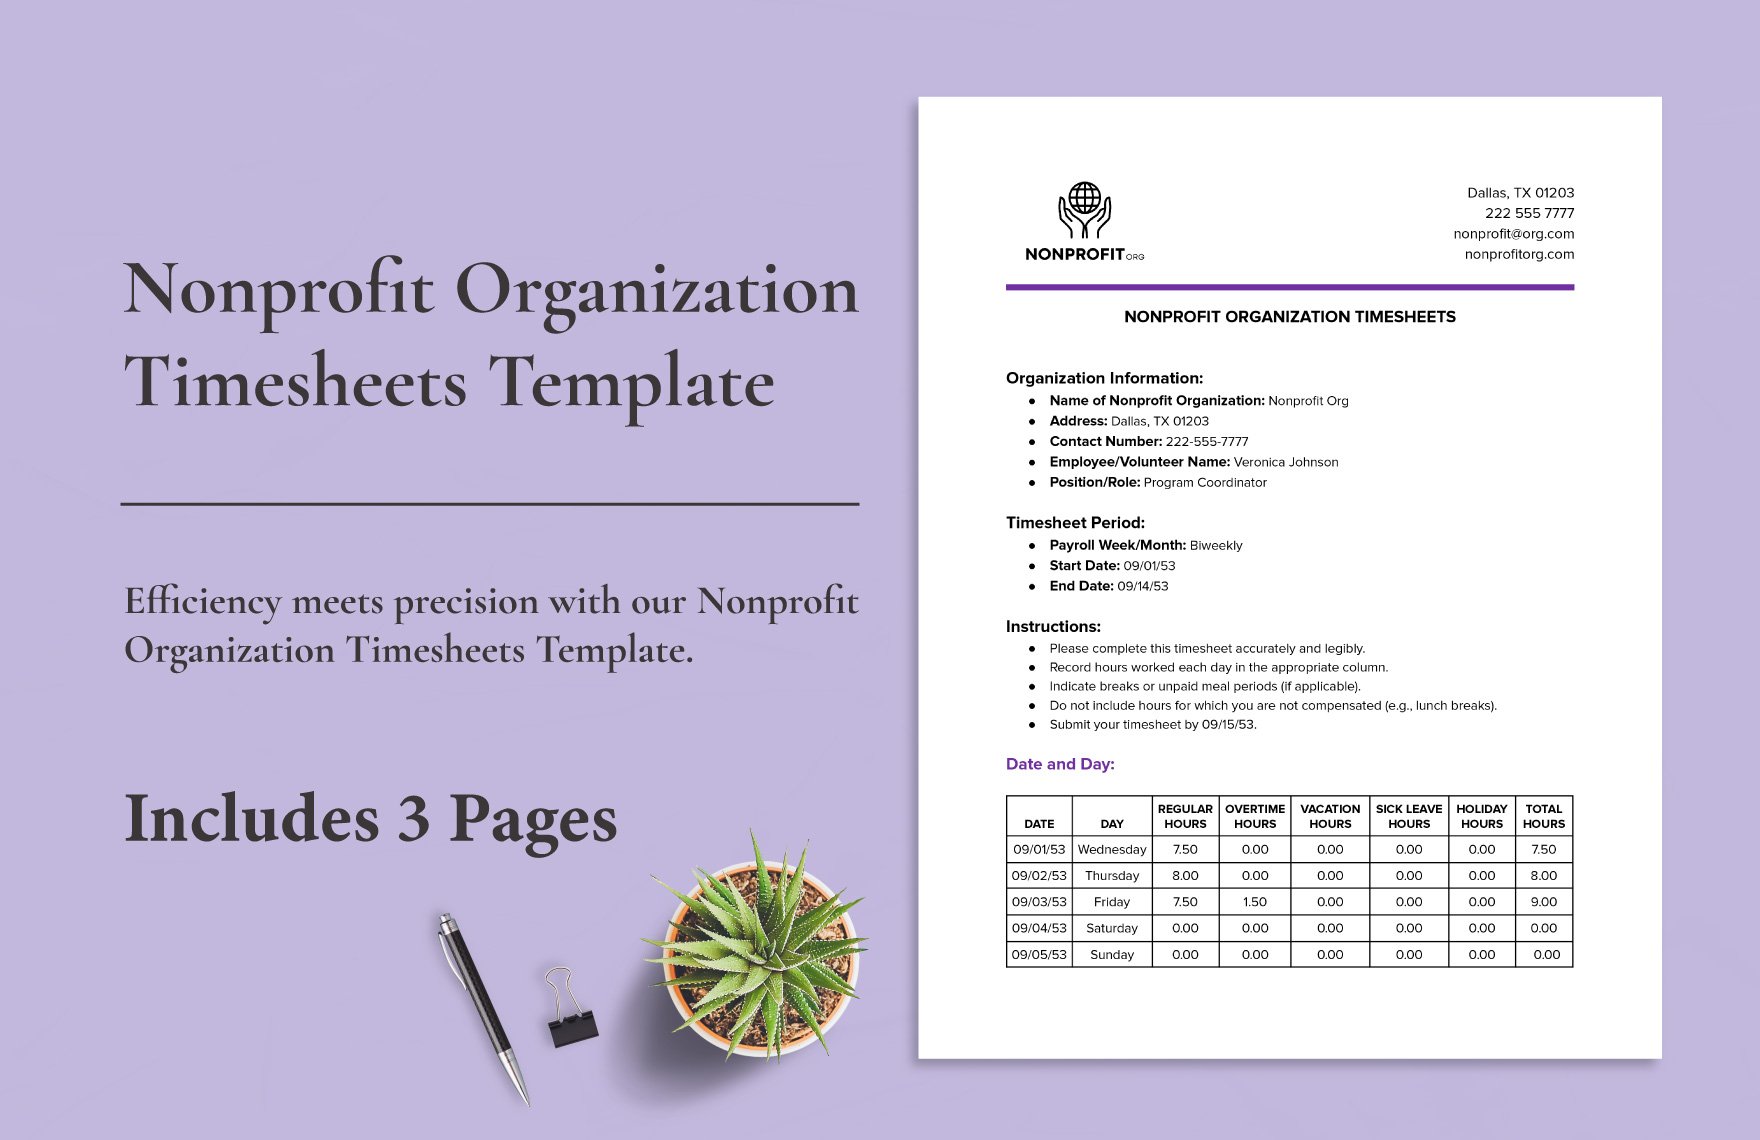 Nonprofit Organization Timesheets Template in Word, Google Docs, PDF